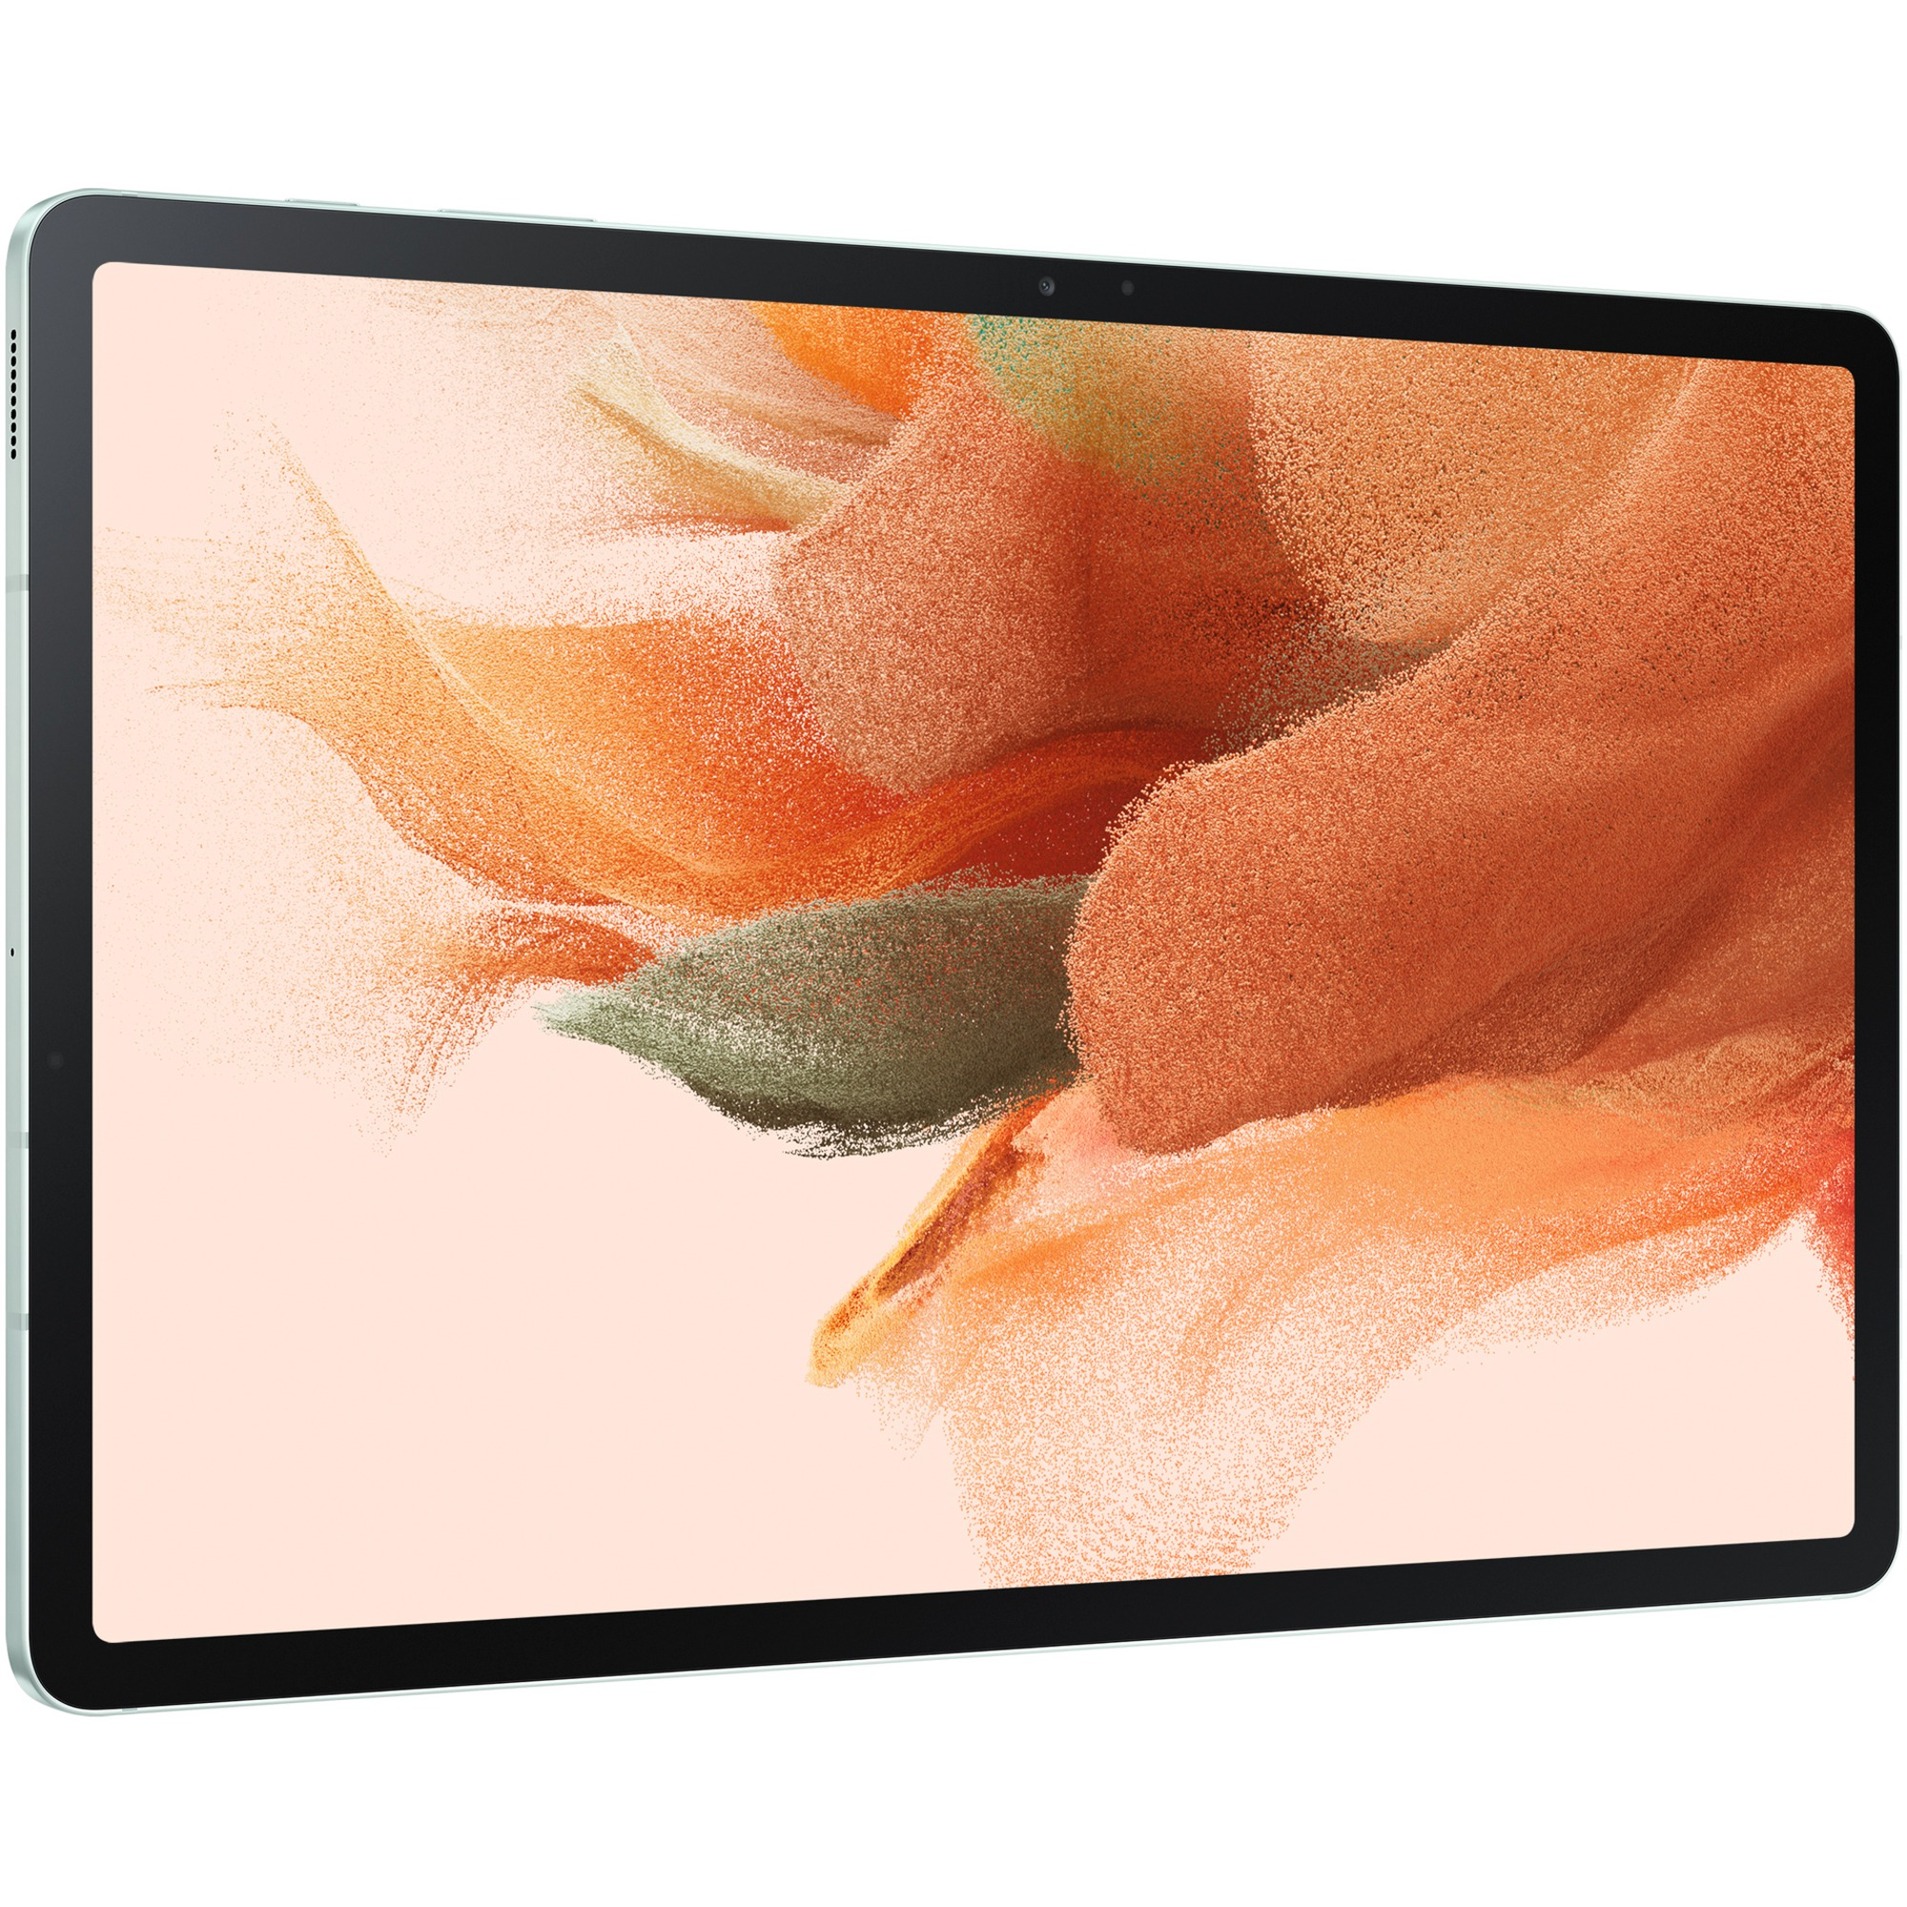 Image of Alternate - Galaxy Tab S7 FE Wi-Fi 64GB, Tablet-PC online einkaufen bei Alternate